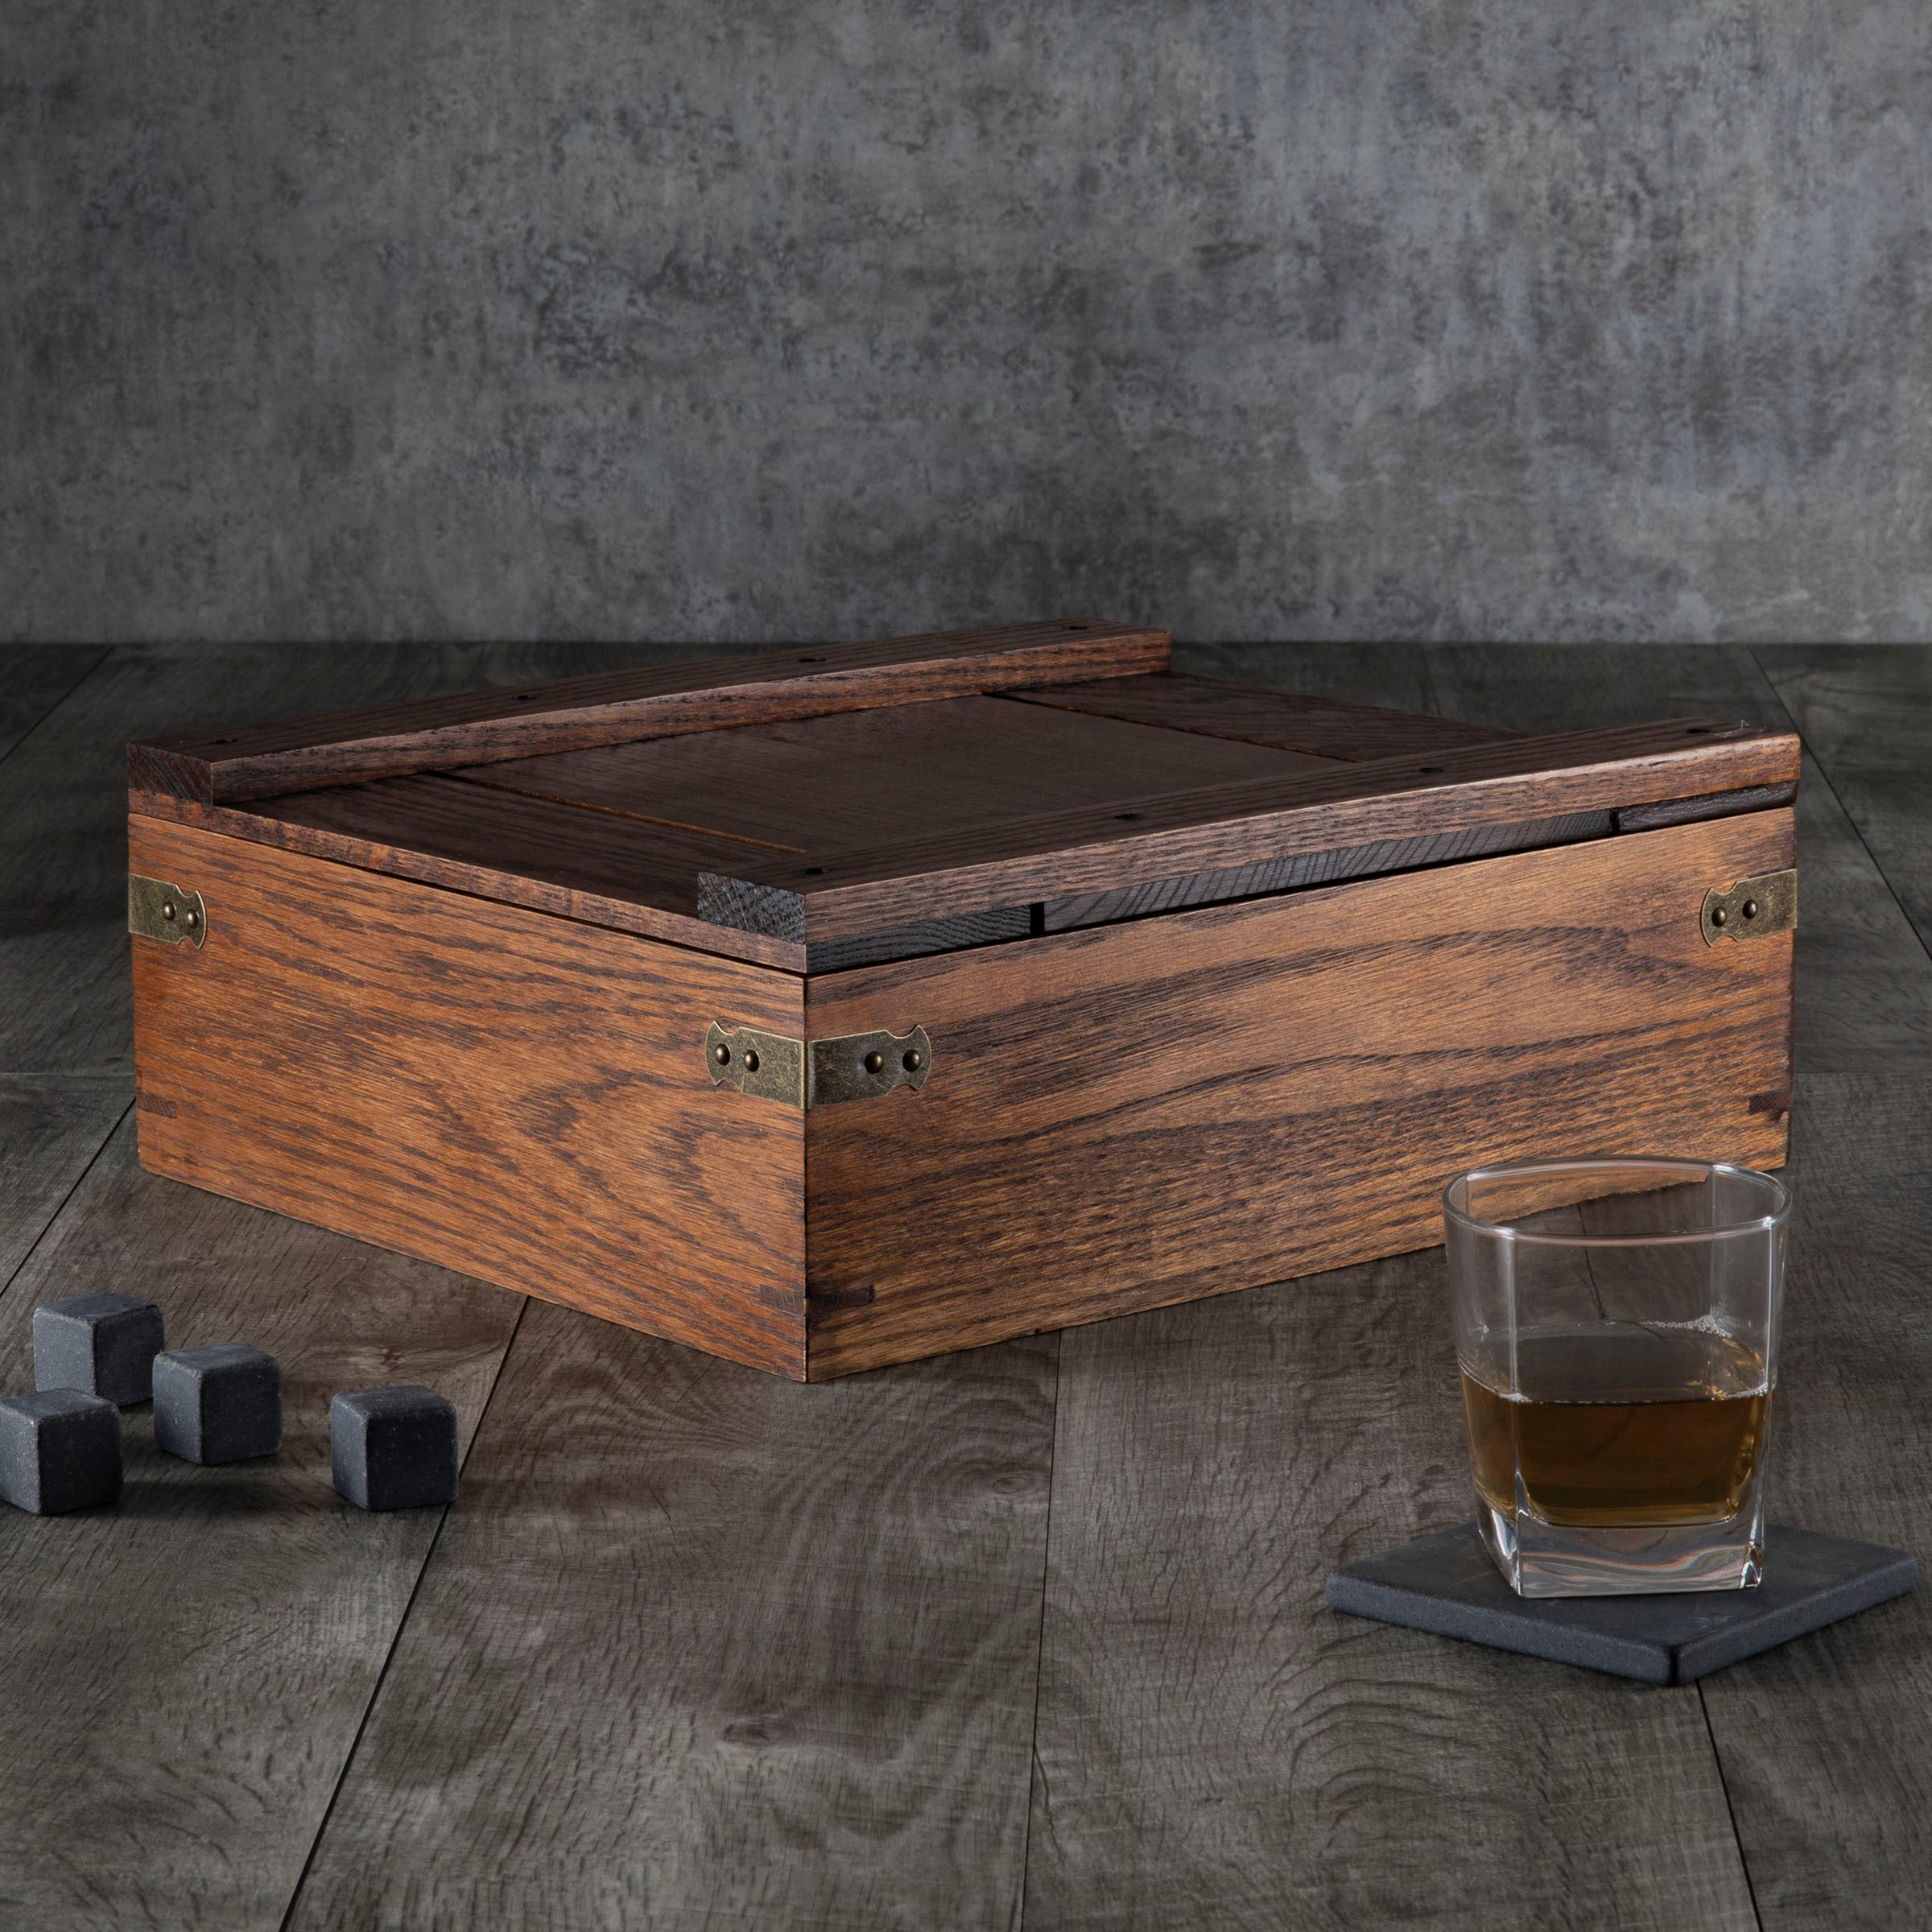 Cal Bears - Whiskey Box Gift Set